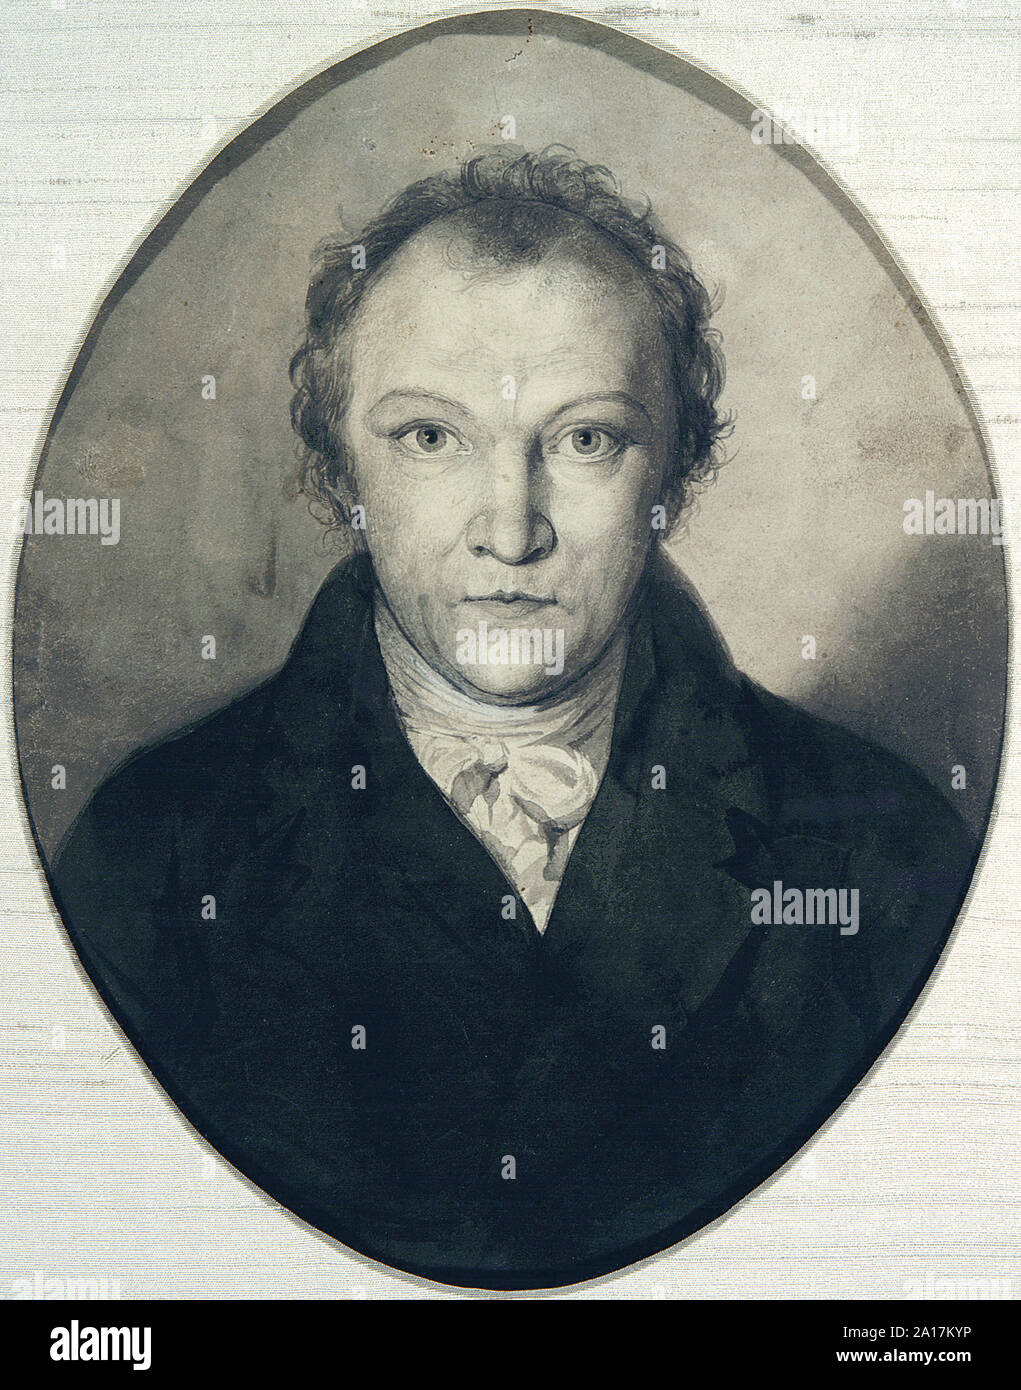 William Blake, William Blake (1757 - 1827), poeta y artista plástico inglés Foto de stock